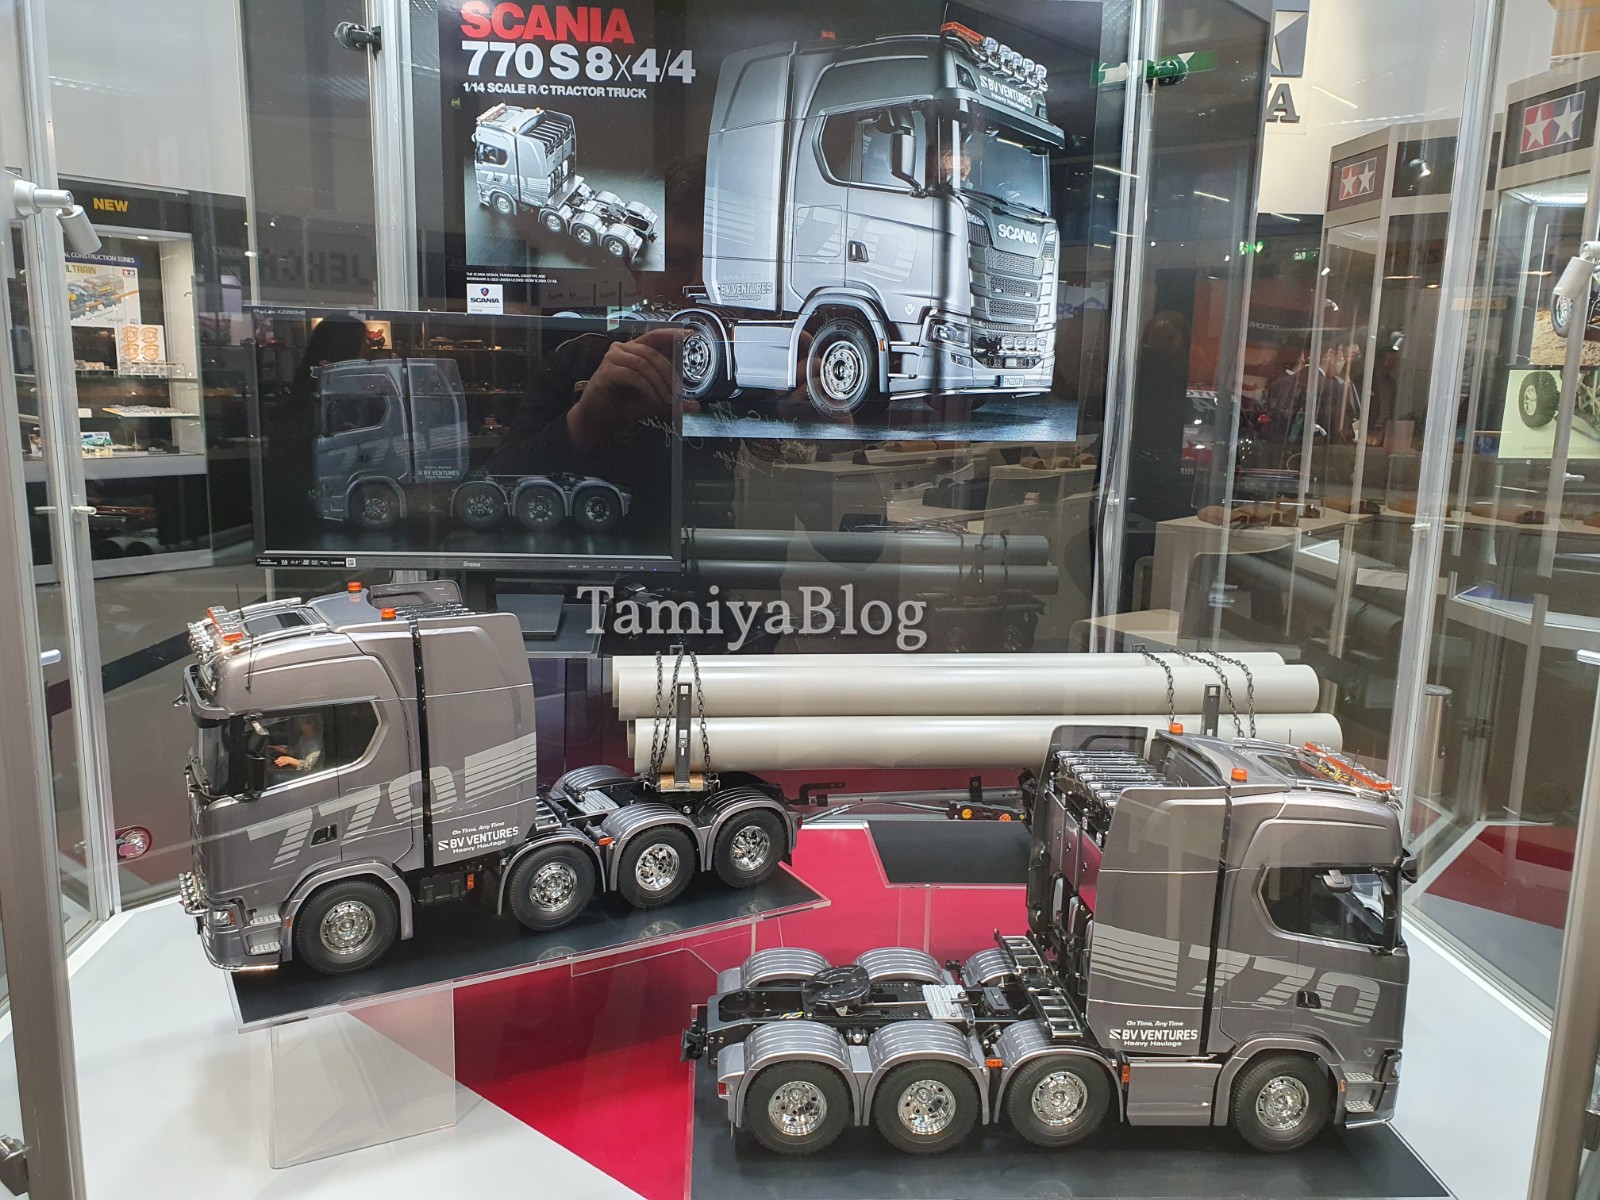 Tamiya 56371 1/14 RC Scania 770S 8×4/4 at Nuremberg Toy Fair 2023